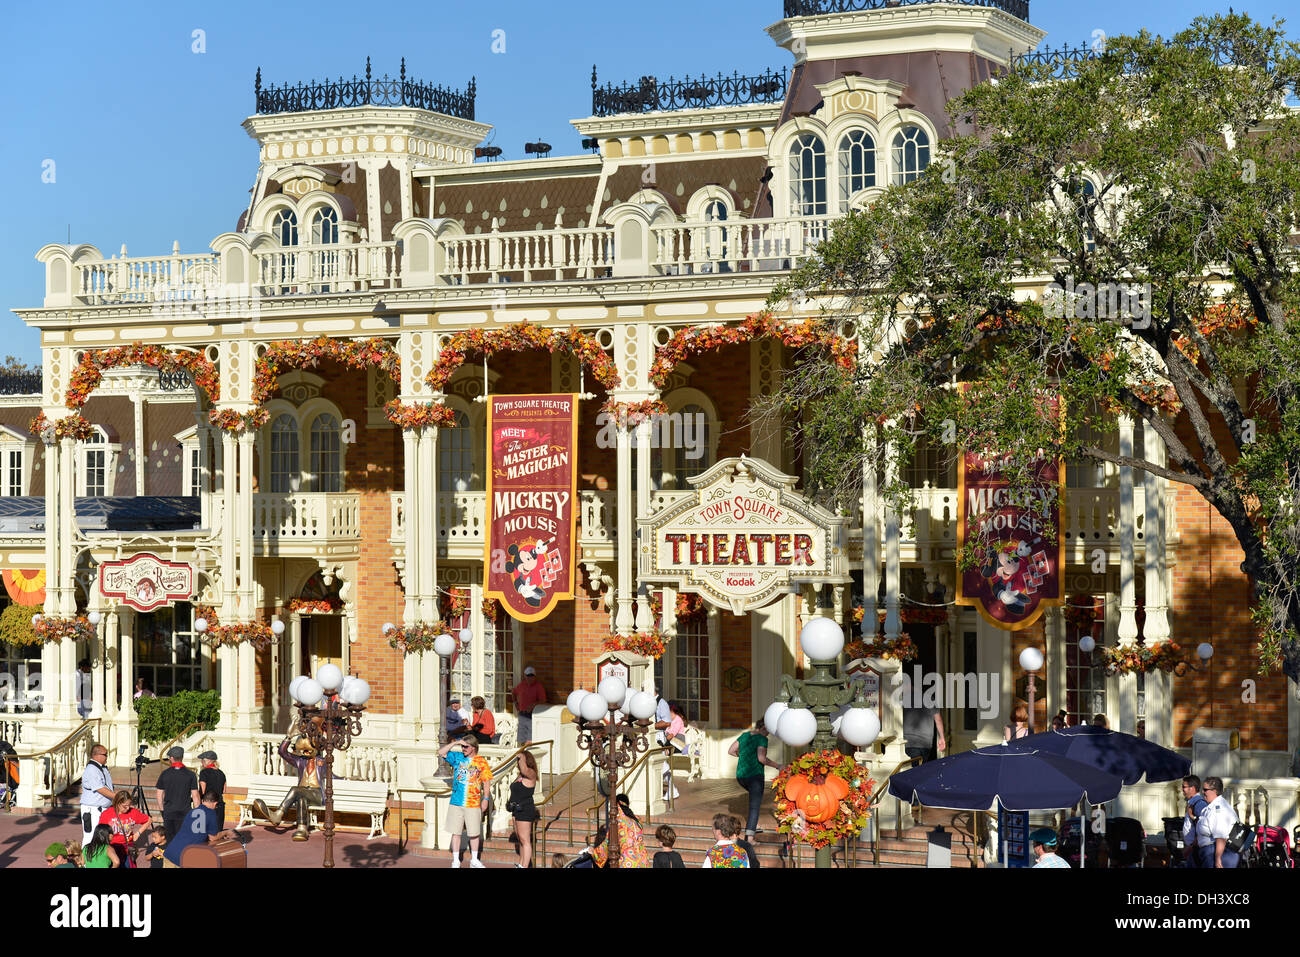 Town Square Theatre am Eingang des Magic Kingdom, Disney World, Orlando Florida Stockfoto